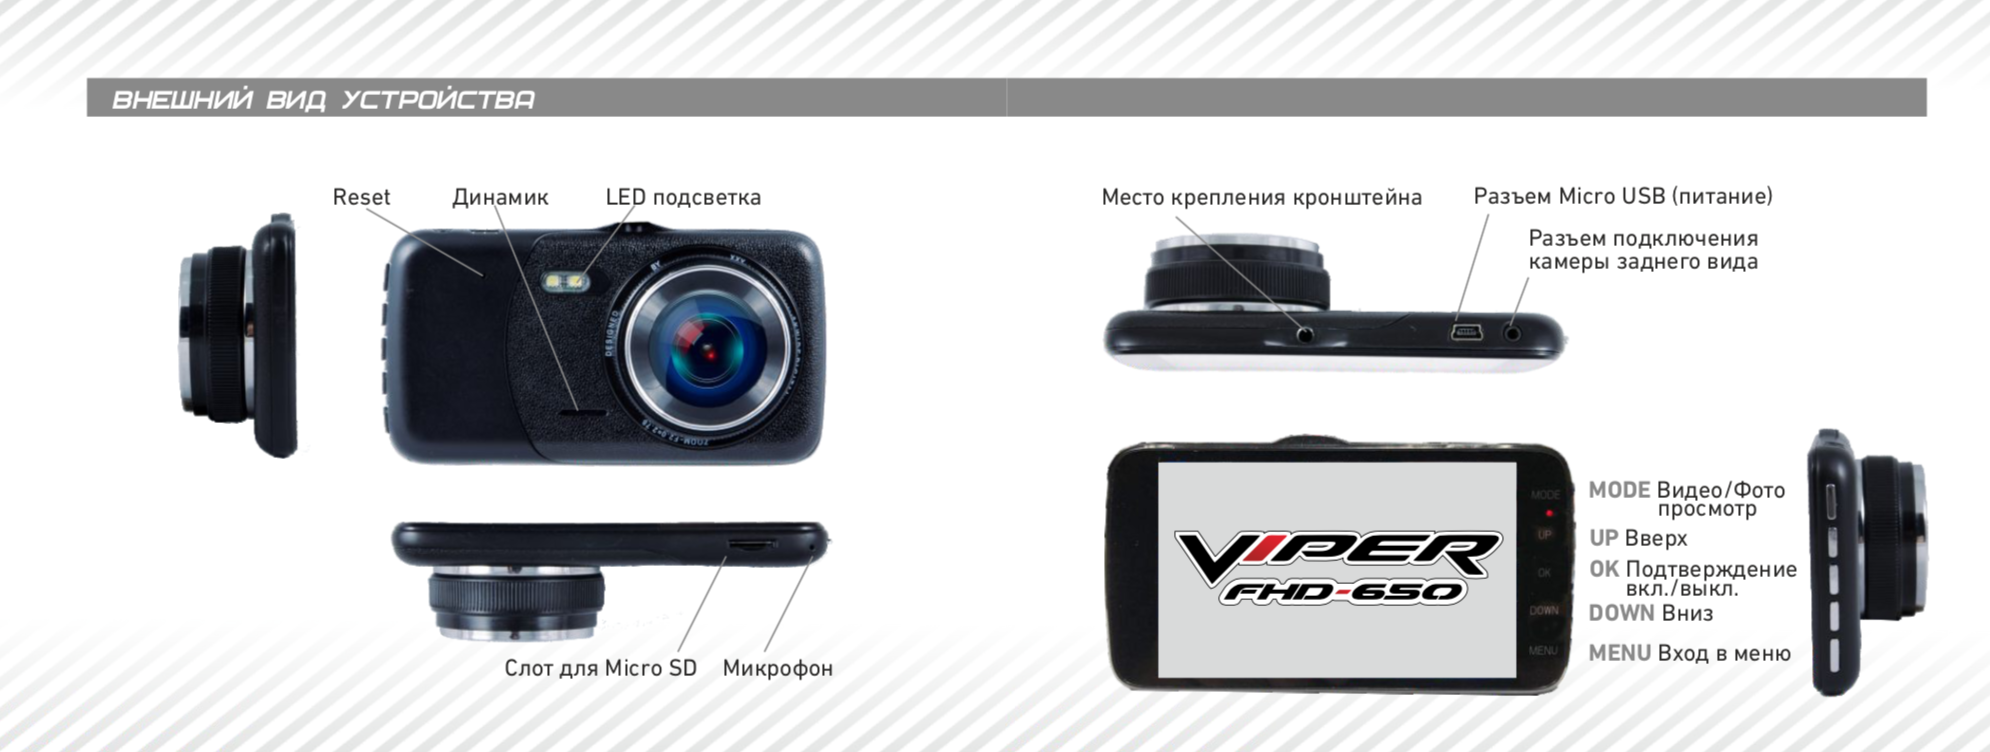 Регистратор viper. Видеорегистратор Viper FHD-650. Автомобильный видеорегистратор Viper FHD 650 2 камеры (внутренняя). Автомобильный видеорегистратор Viper z1 Sky.